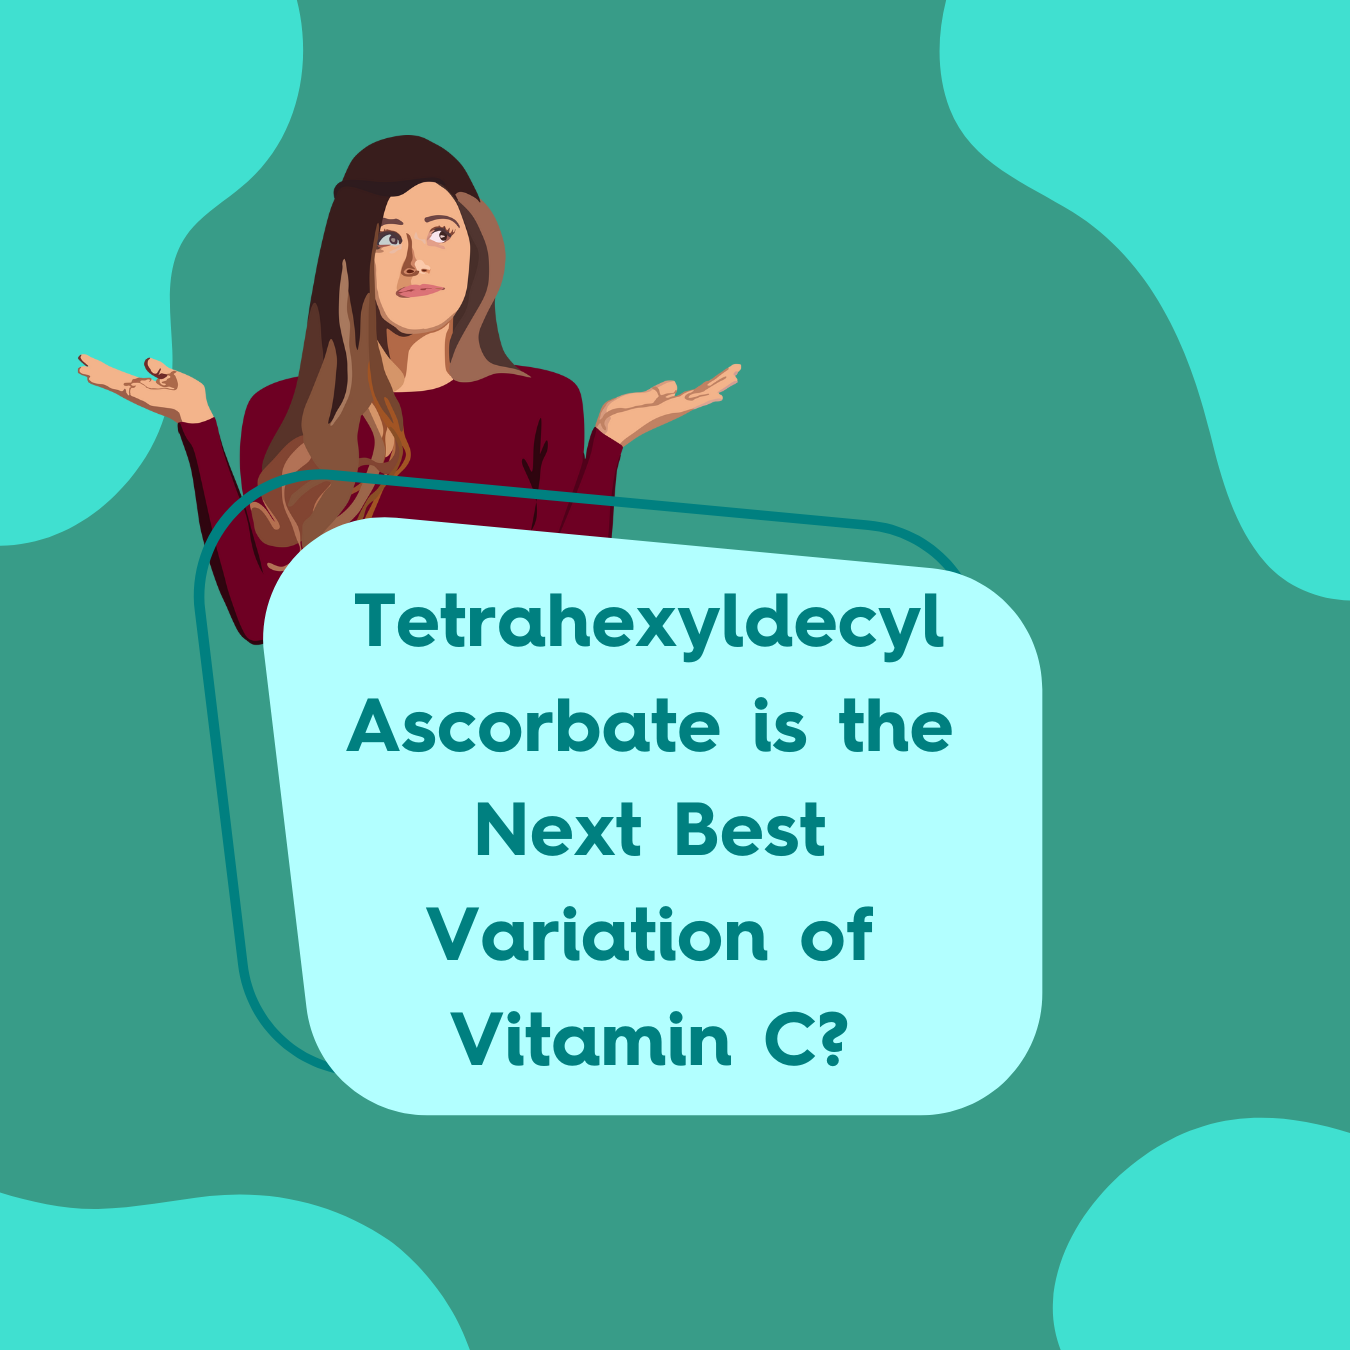 Tetrahexyldecyl Ascorbate is the Next Best Variation of Vitamin C?